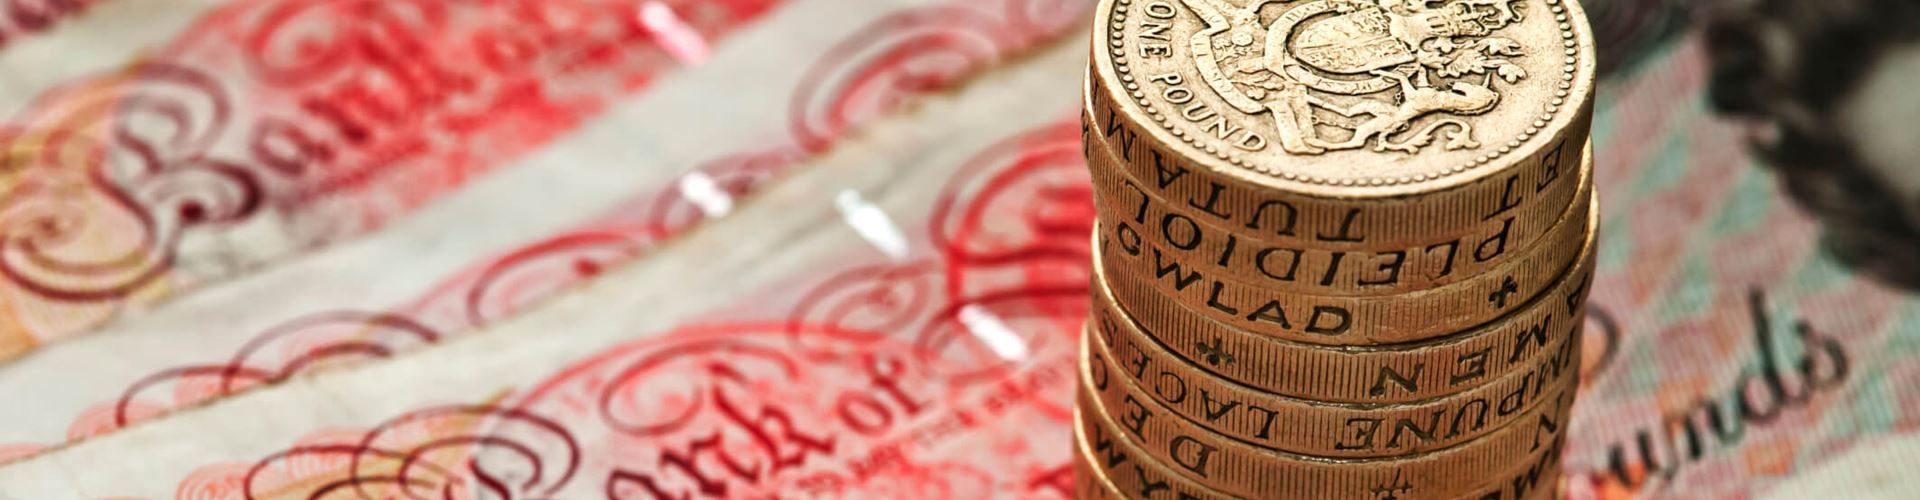 HMRC taskforces add £109m to public purse in 6 months